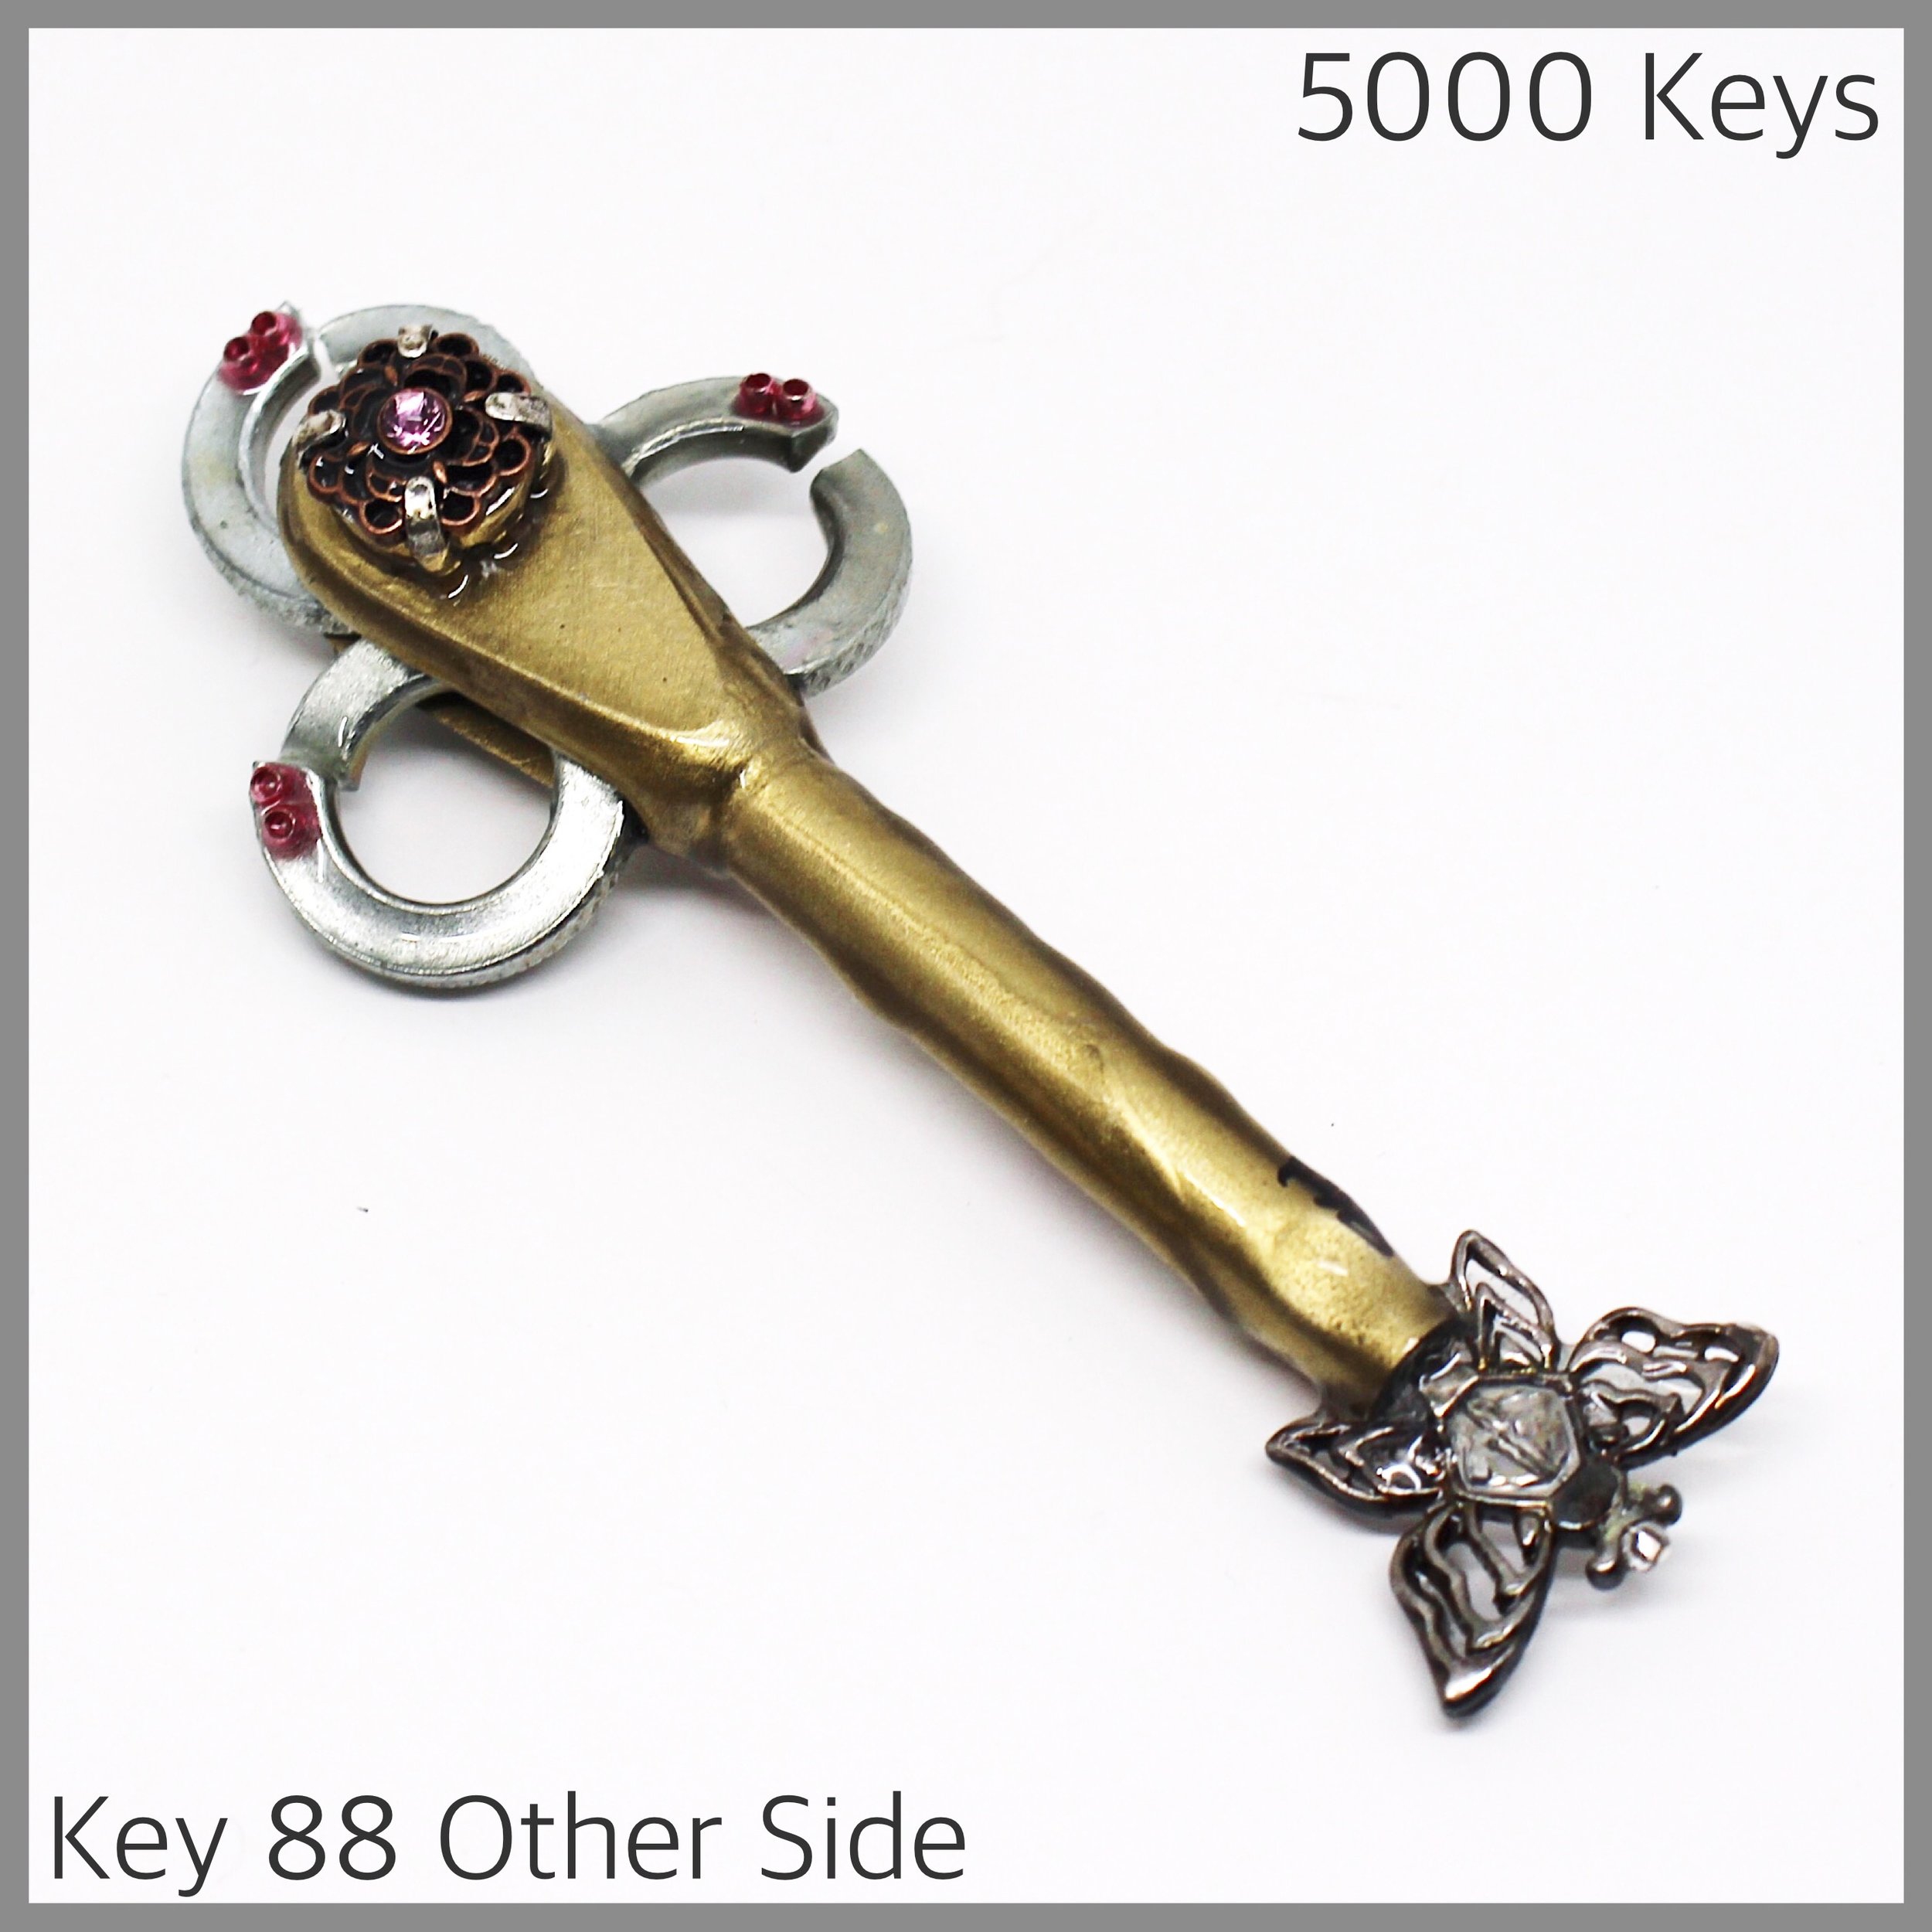 Key 88 other side.JPG